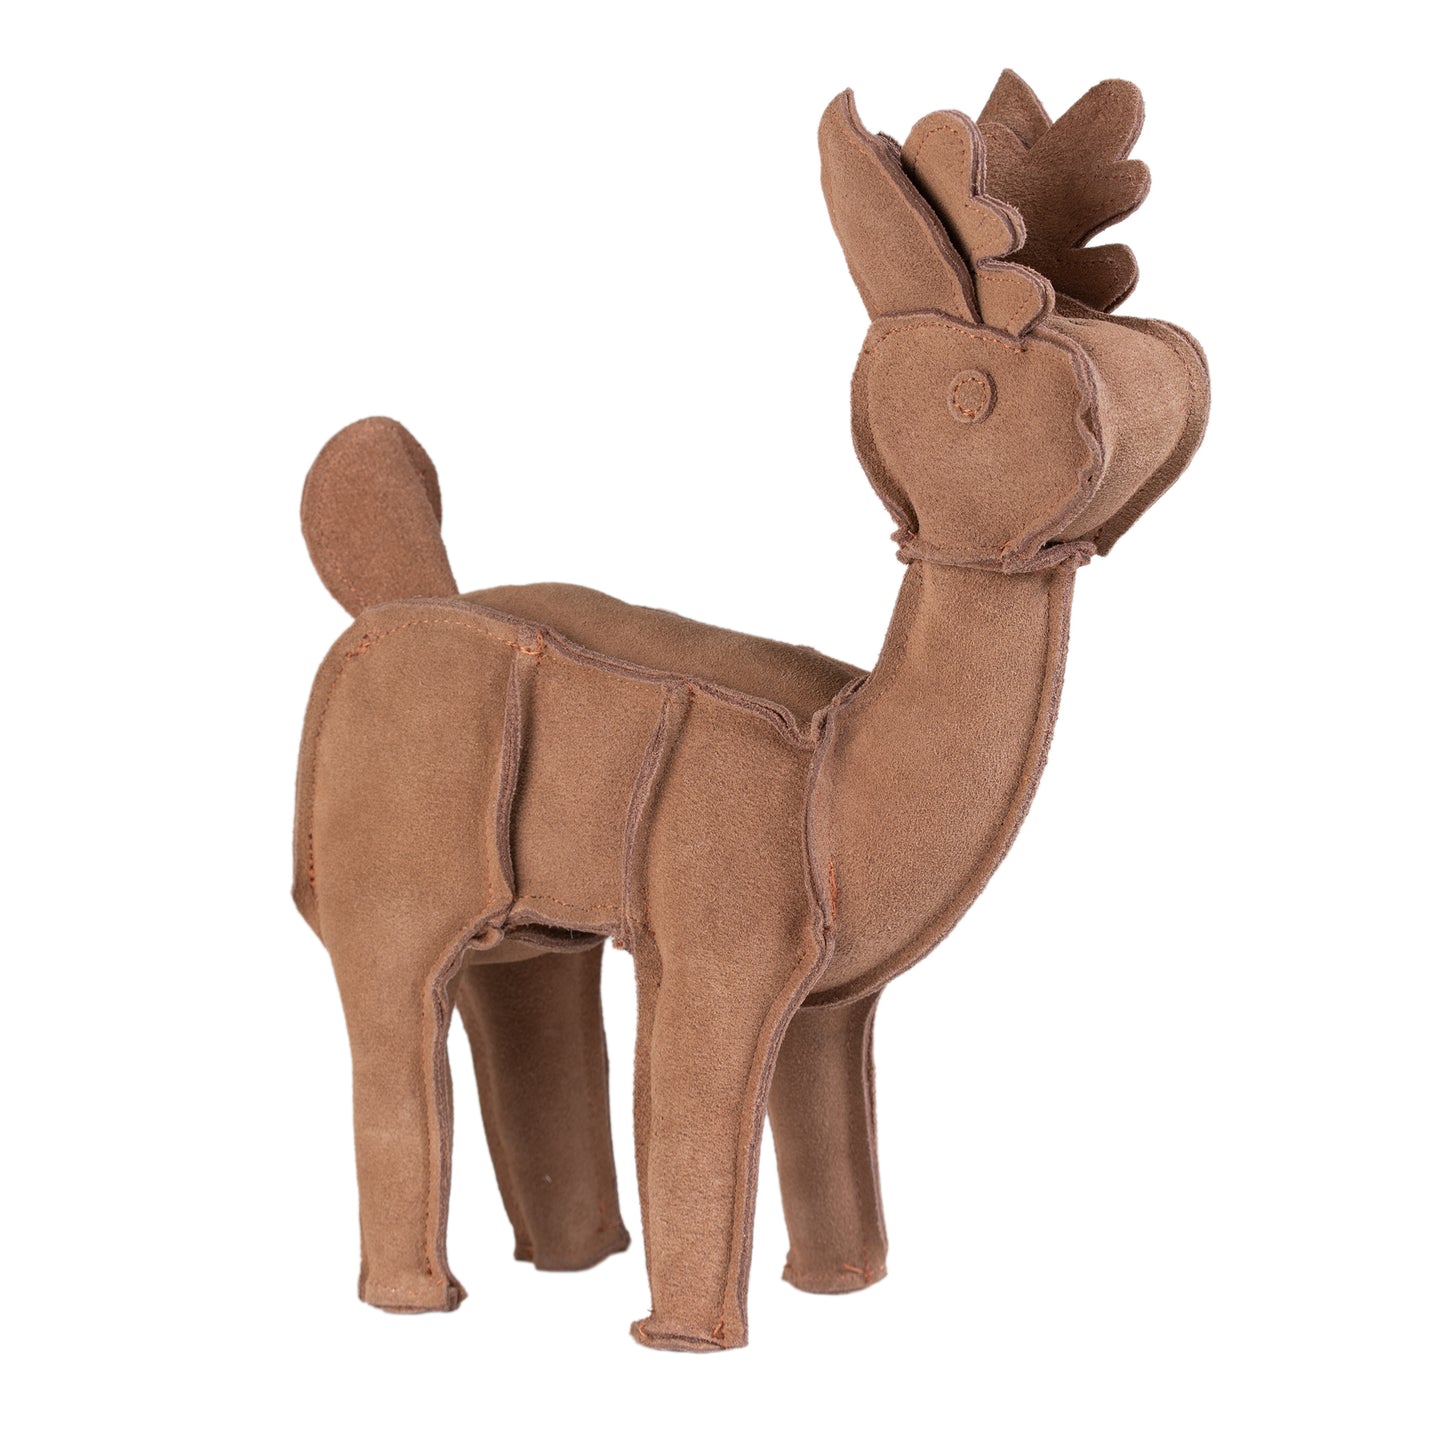 PAiKKA | Rentier Spielzeug | Reindeer Toy